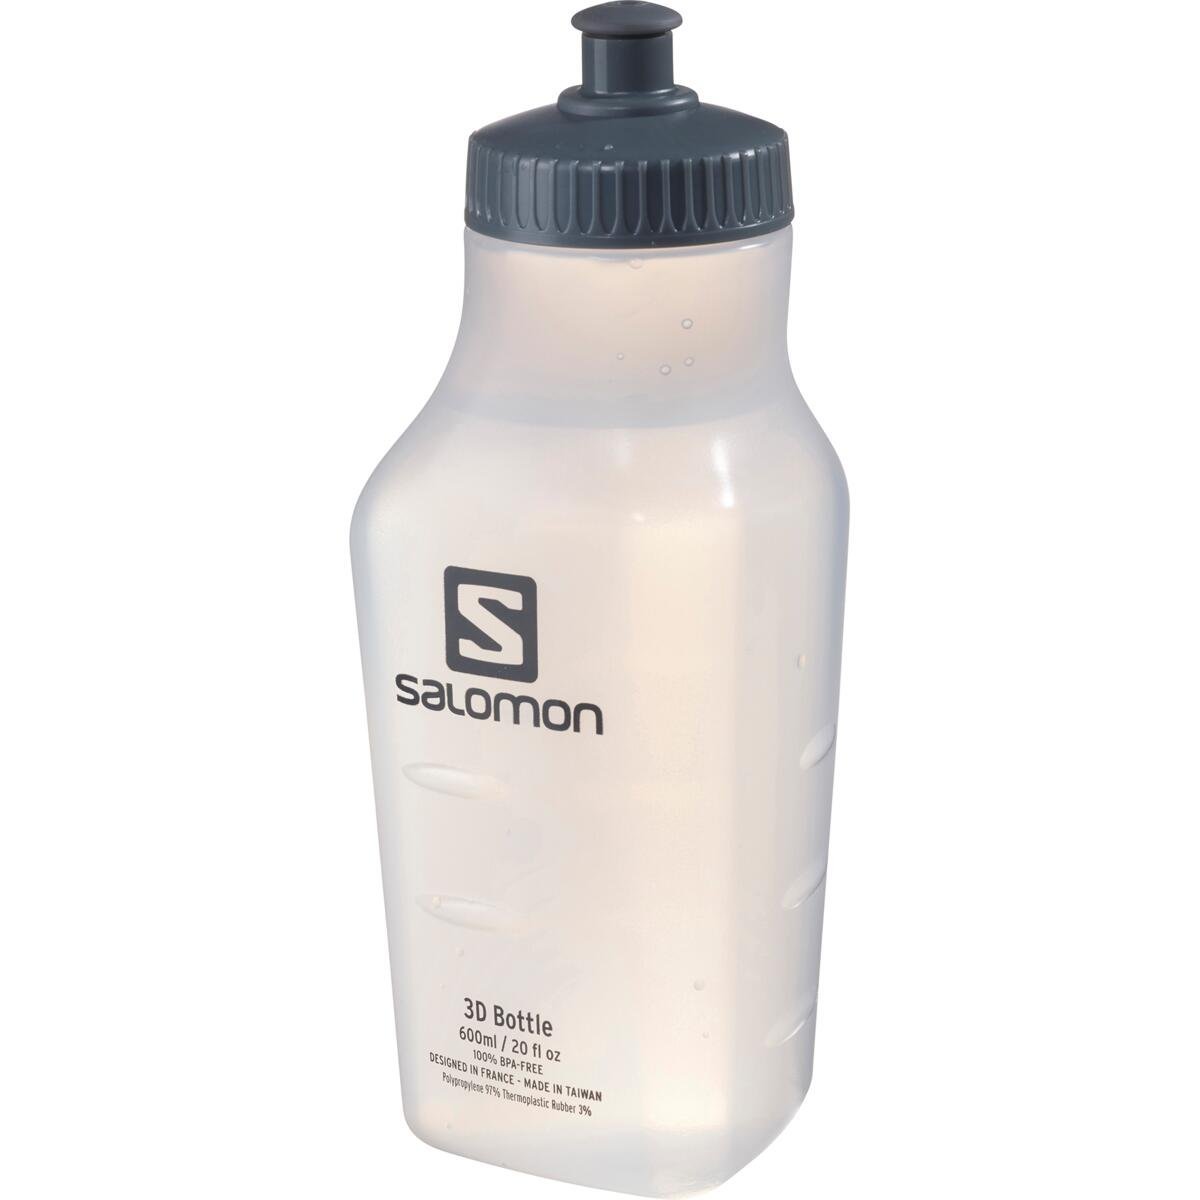 Fľaša Salomon 3D BOTTLE 600ml - biela